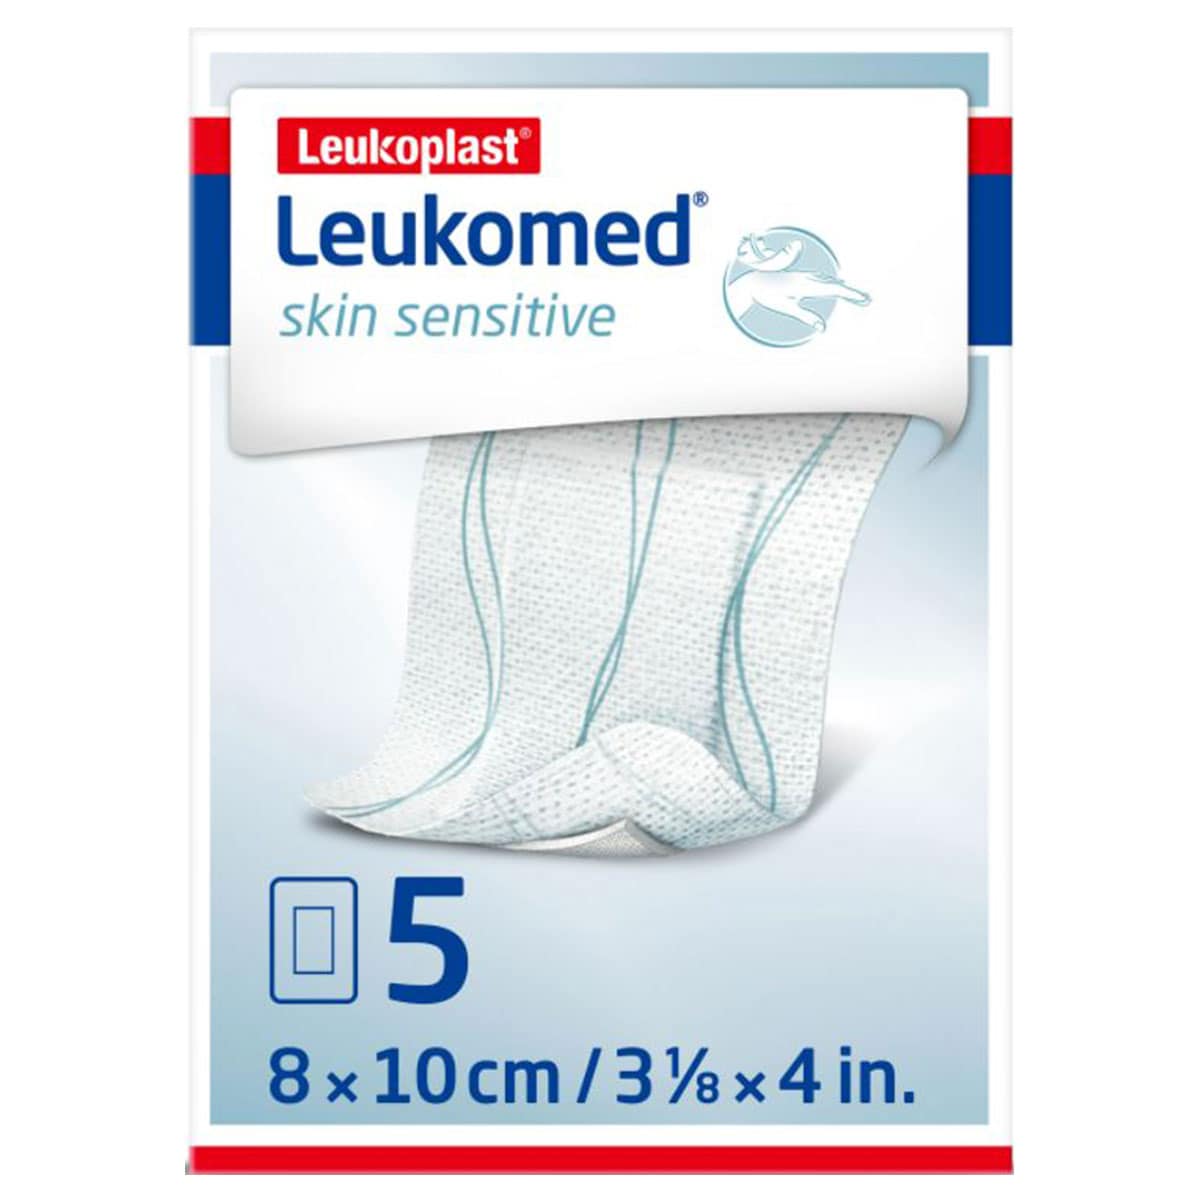 Leukoplast Leukomed Skin Sensitive Sterile 8cm X 10cm 5 Pack